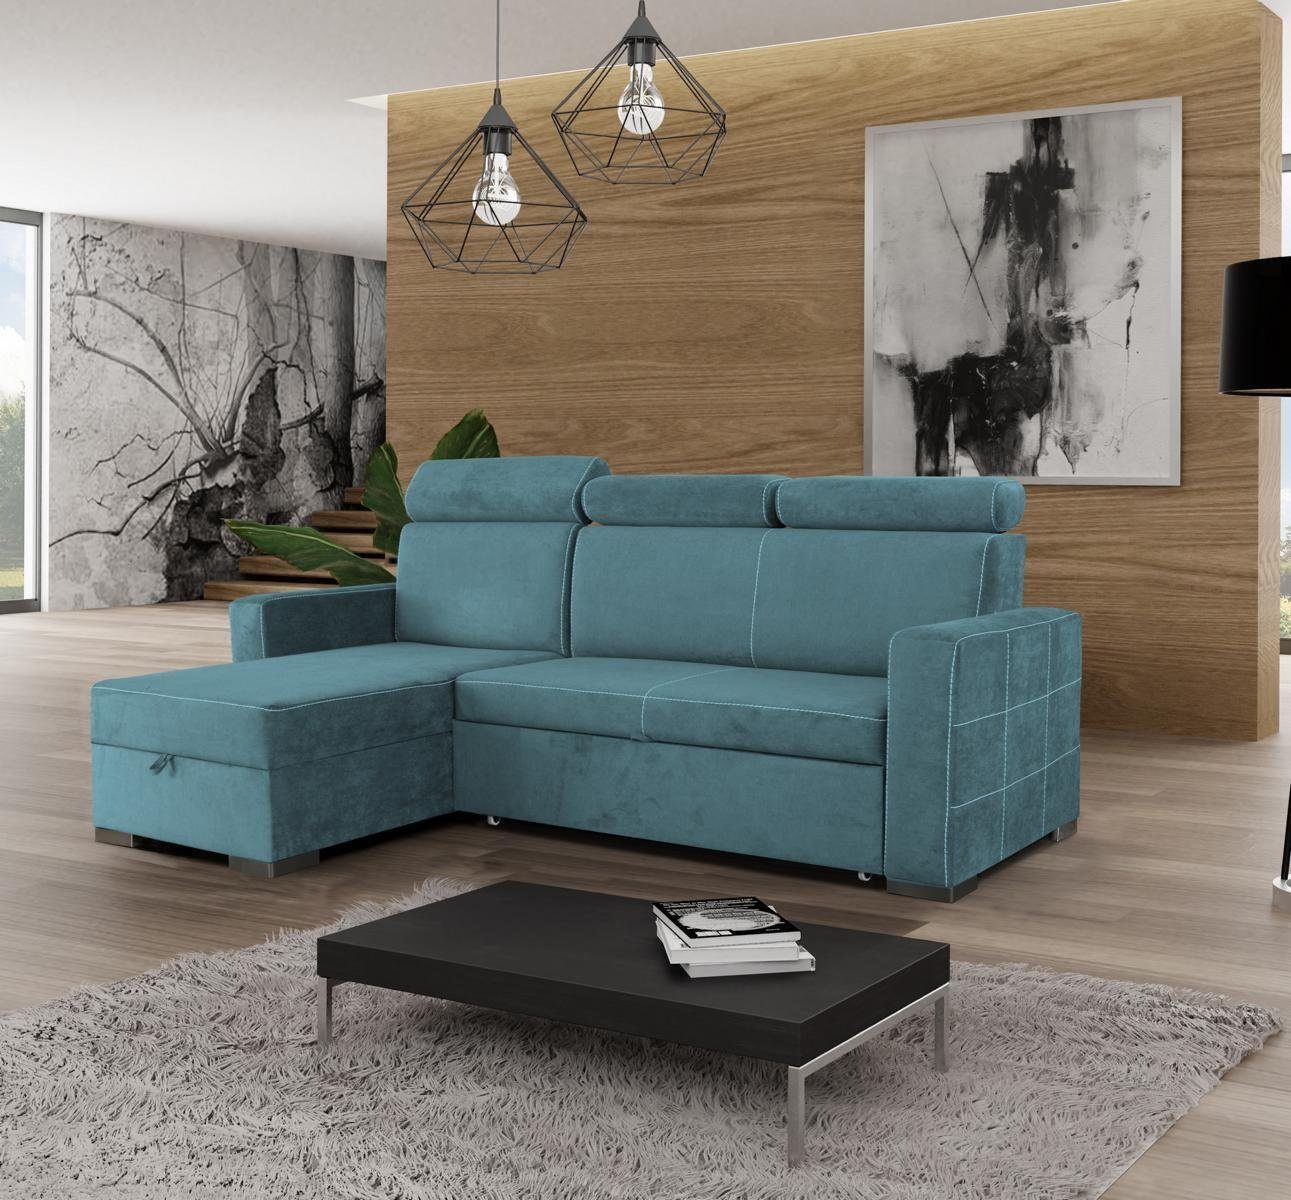 JVmoebel Ecksofa Luxus Blaues Ecksofa Moderne L-Form Couch stilvolles Design Neu, Made in Europe Grün